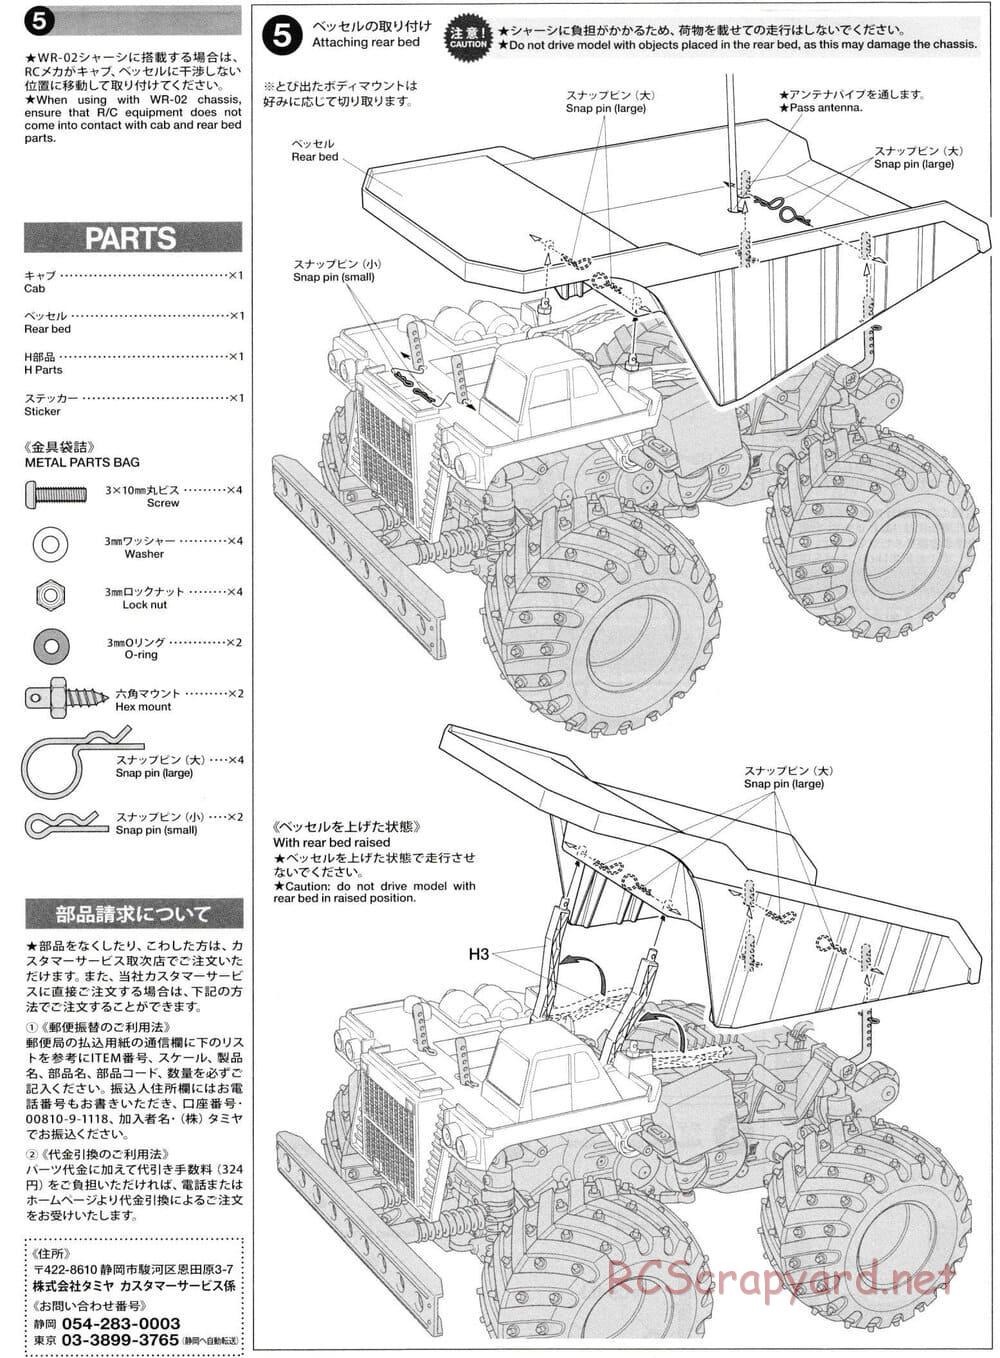 Tamiya - Heavy Dump Truck - GF-01 - Manual - Page 5